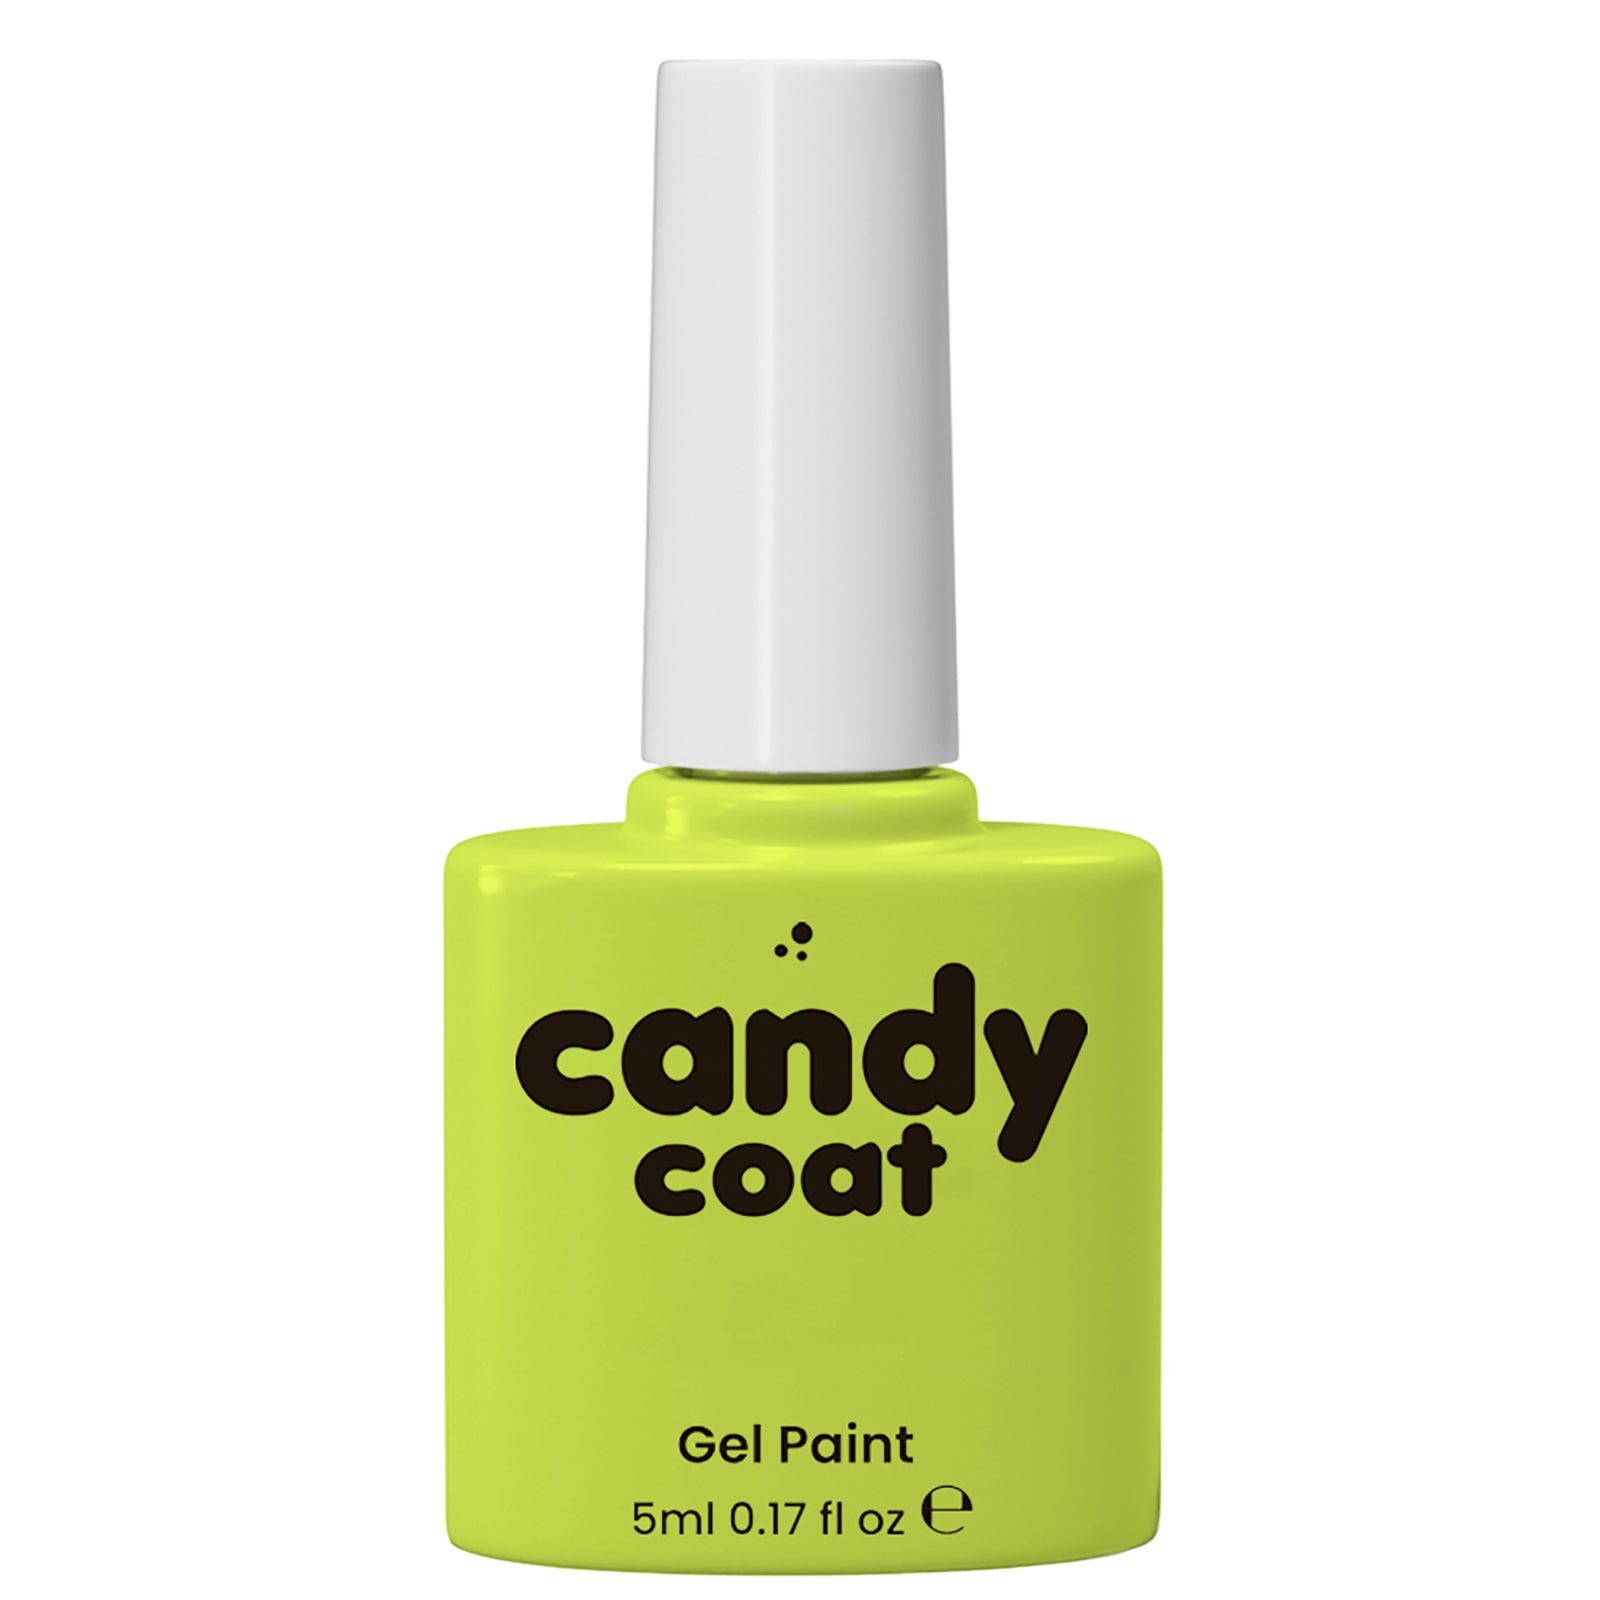 Candy Coat - Gel Paint Nail Colour - Kiki - Nº 244 - Candy Coat